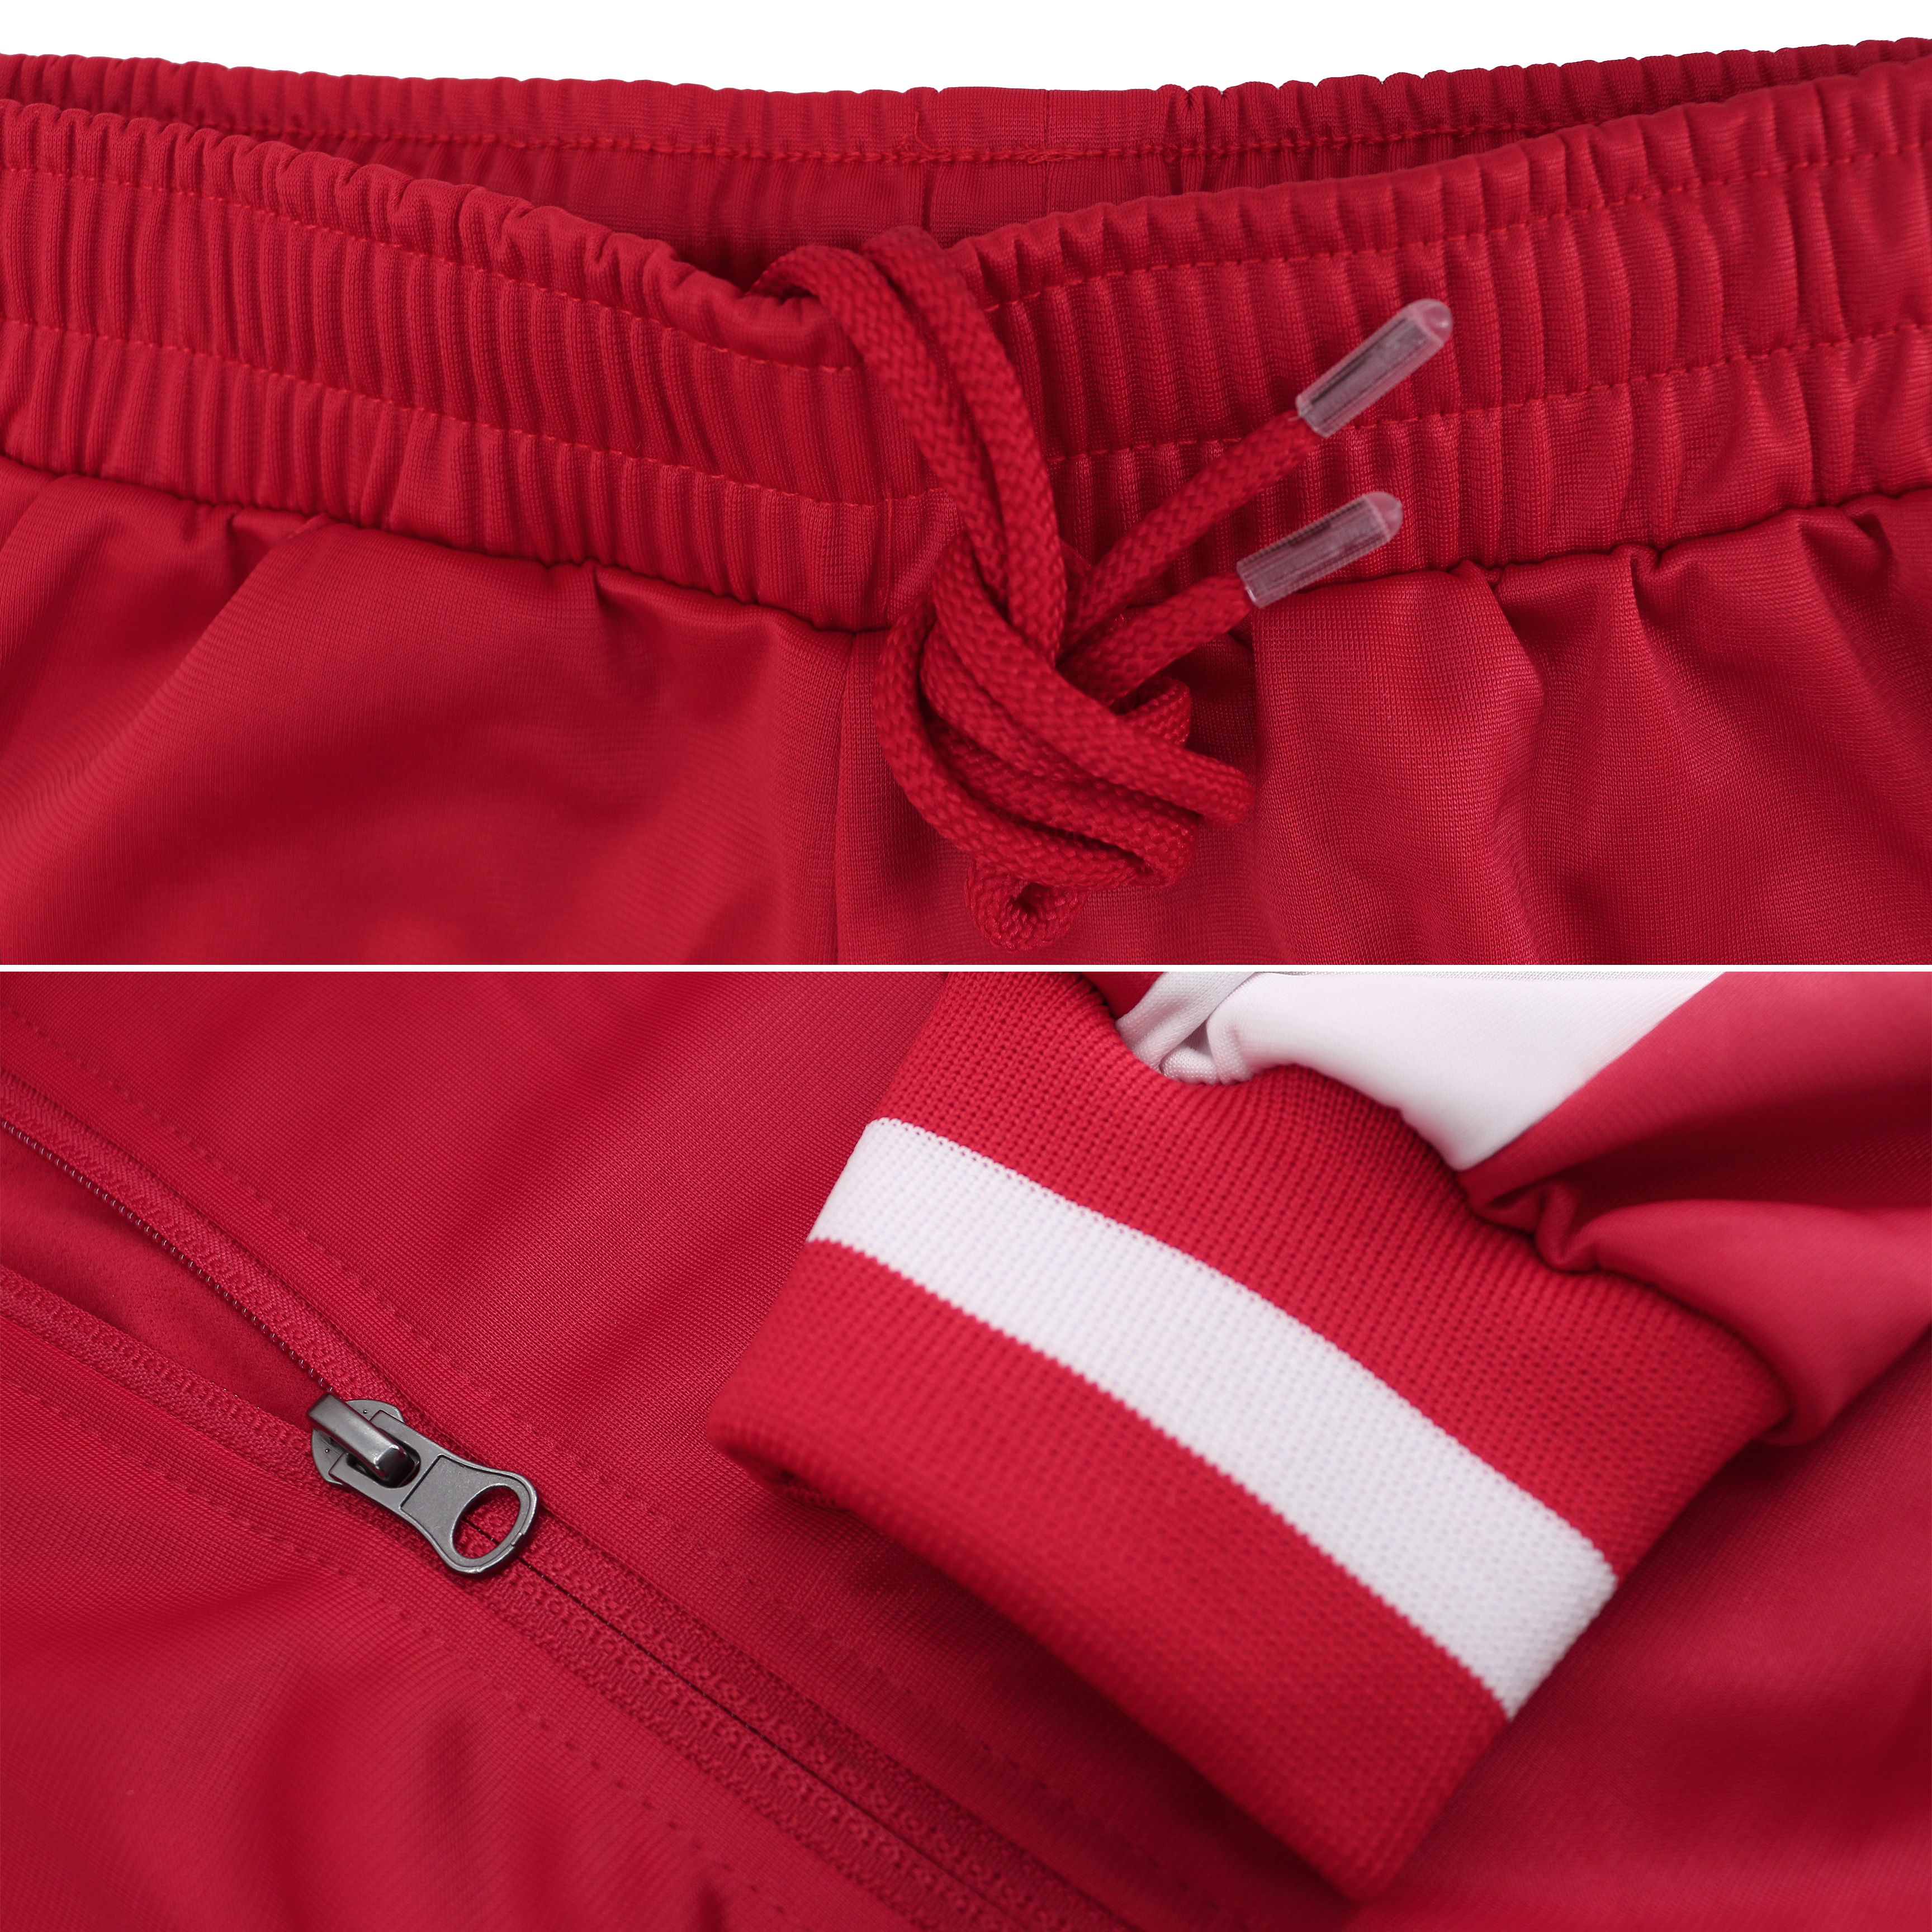 vkwear Men's Striped Athletic Running Jogging Gym Slim Fit Sweat Track Suit  Set (Red, S) - Walmart.com